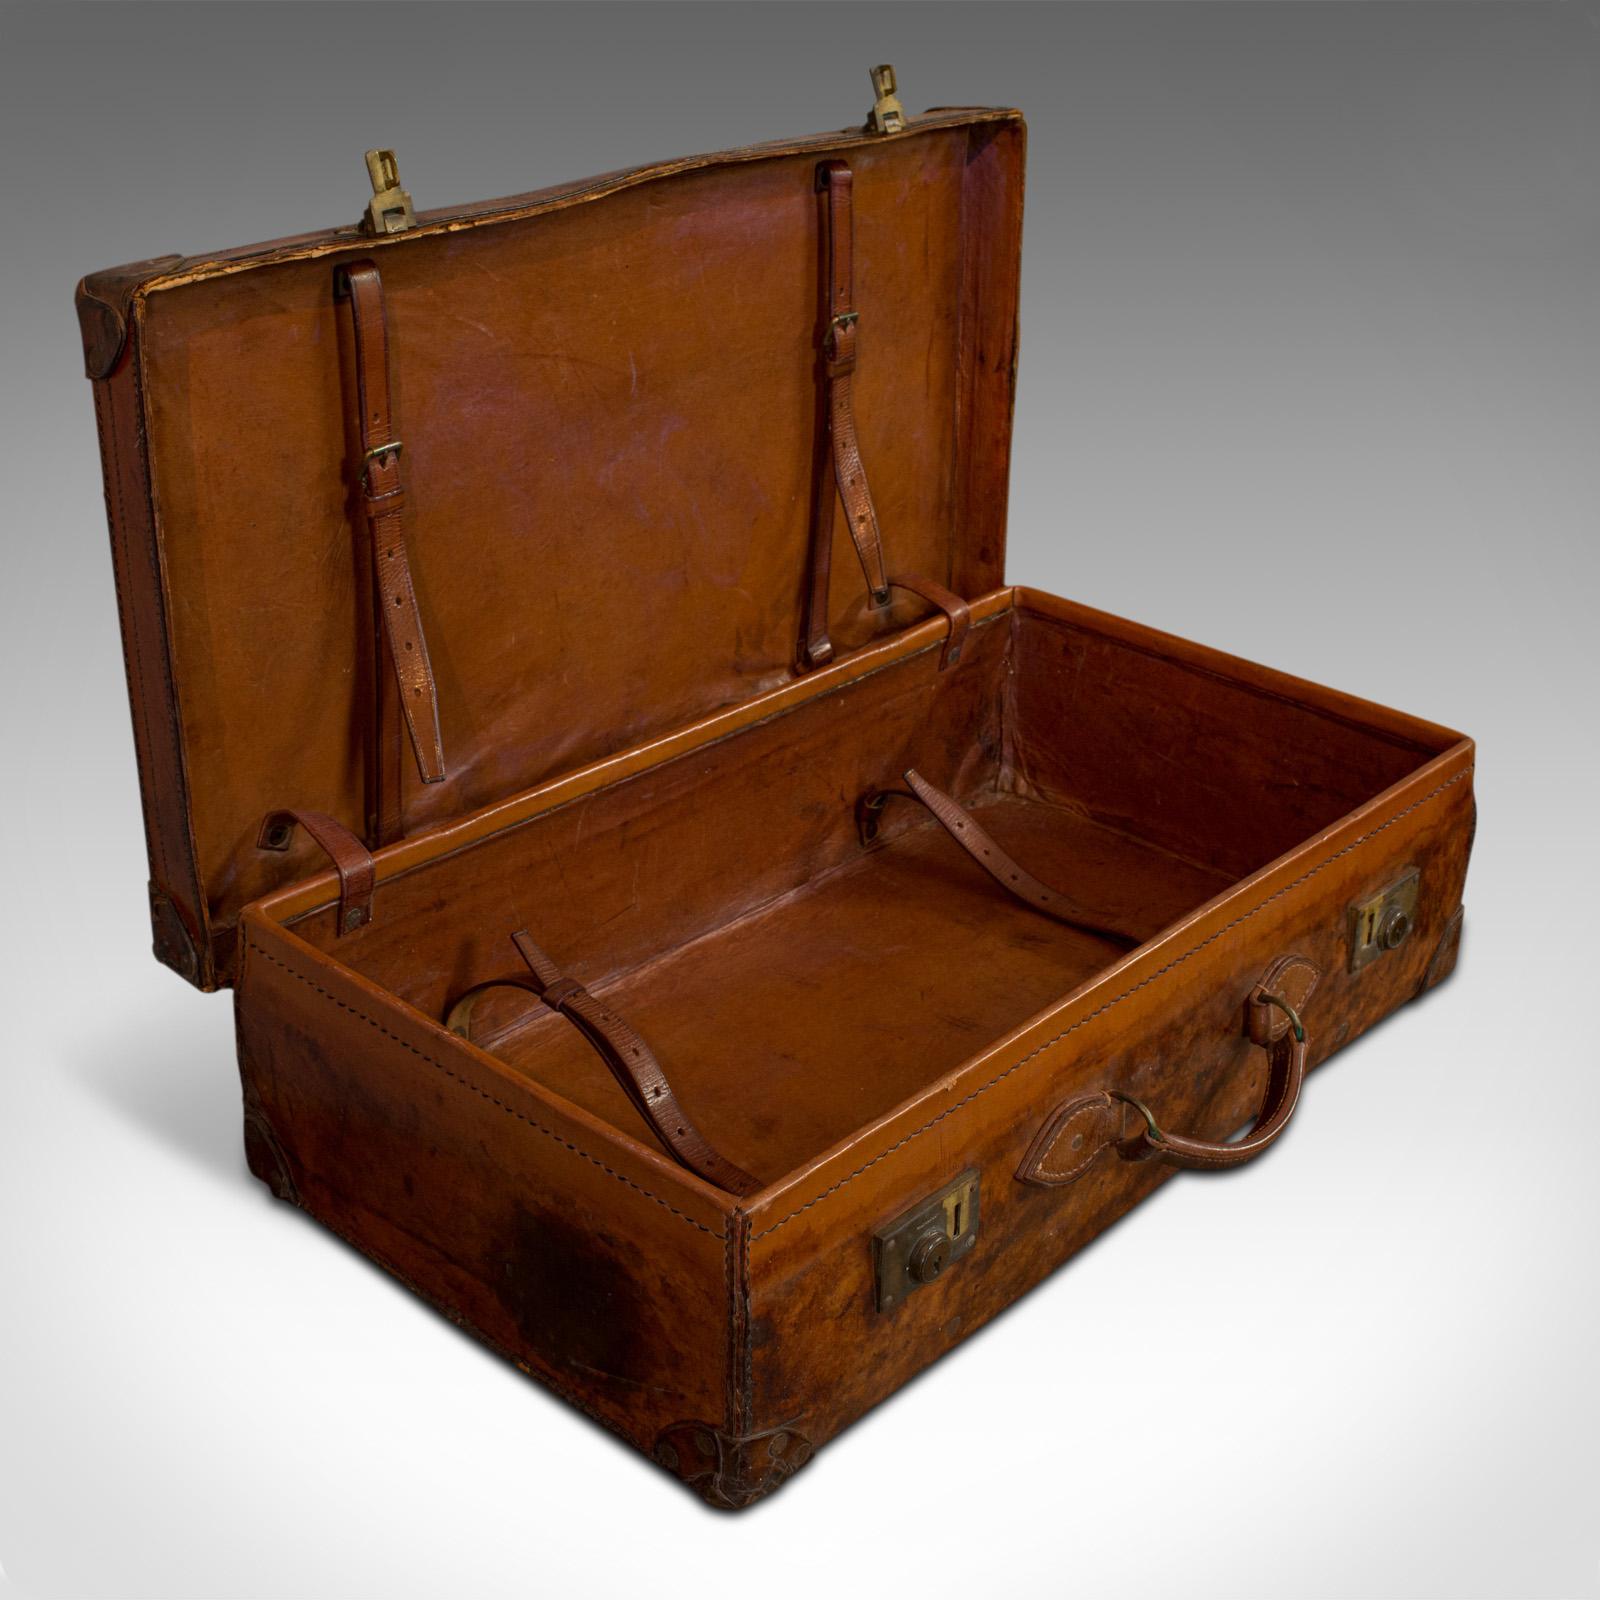 Brass Antique Travel Suitcase English, Leather, Gentleman’s Case, Edwardian circa 1910